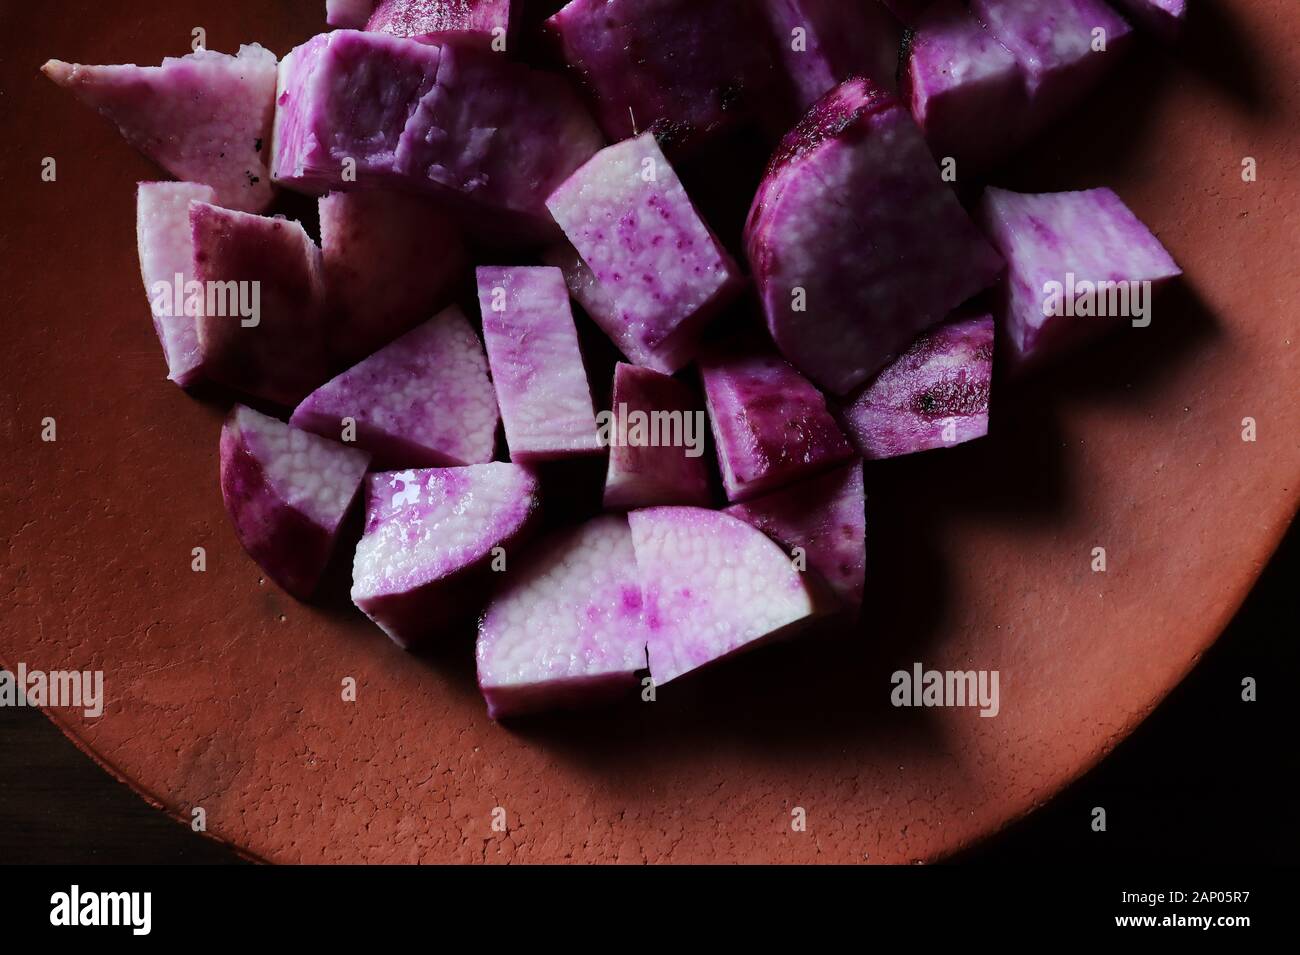 Close-up of chopped purple yam/Dioscorea alata in a terracotta plate Stock Photo